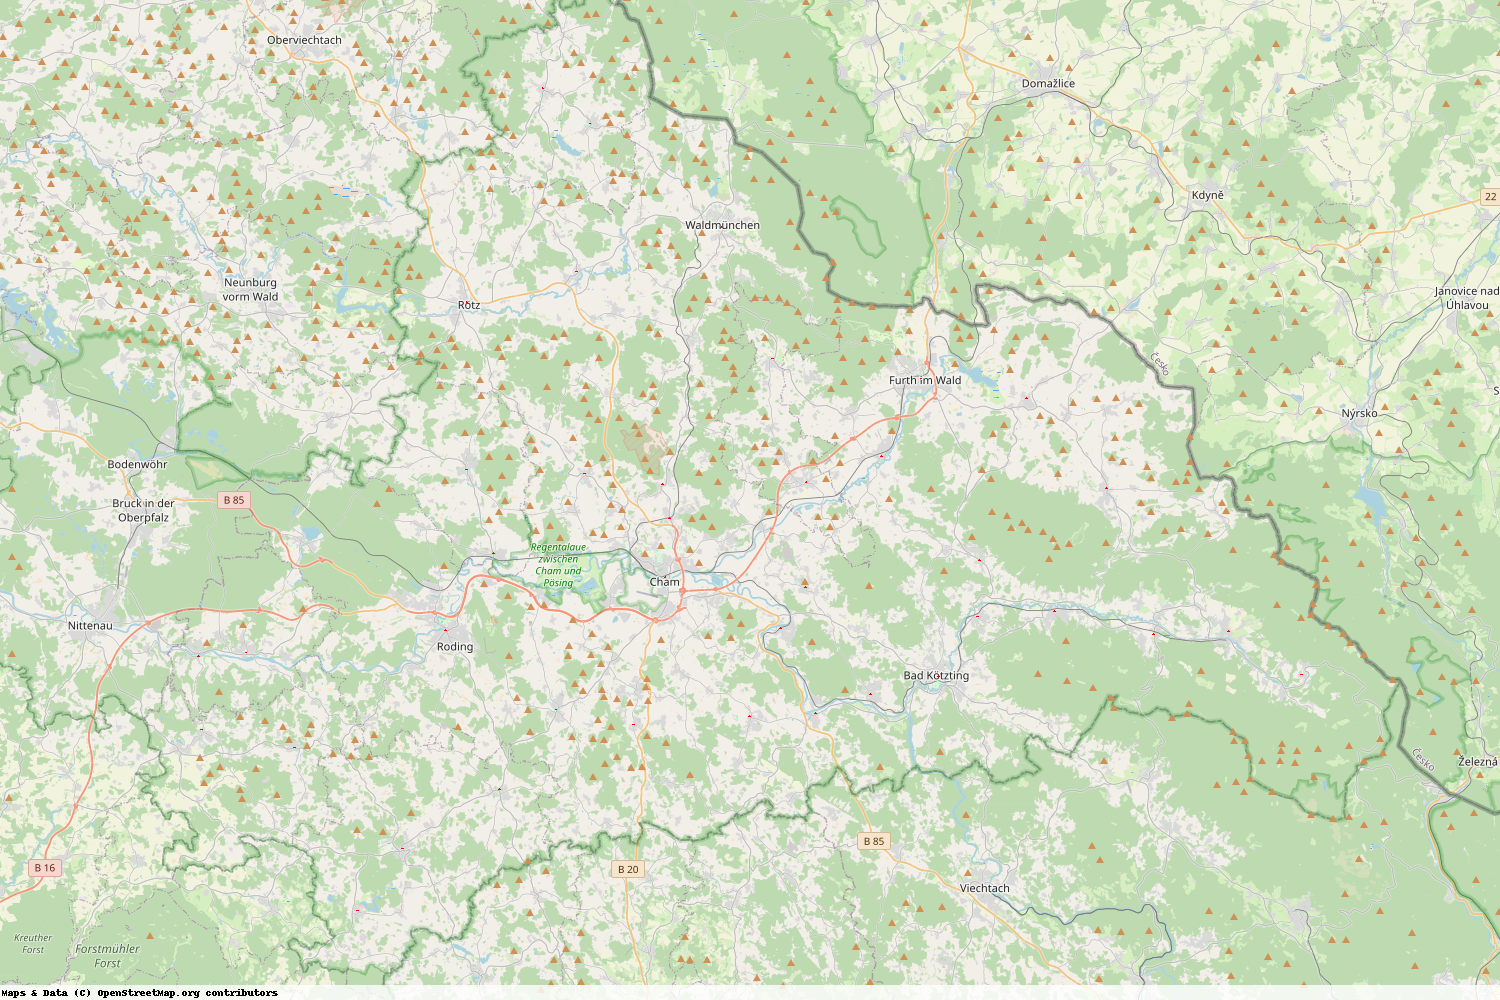 Ist gerade Stromausfall in Bayern - Cham?